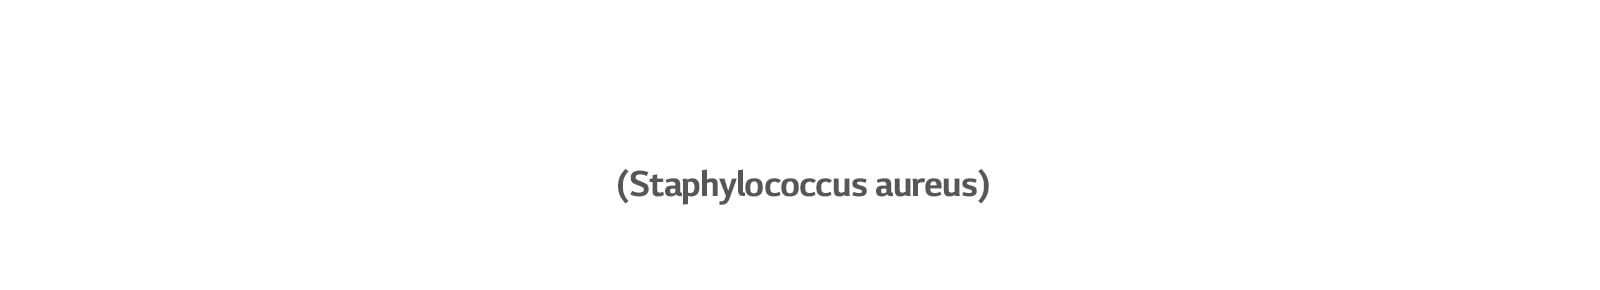 Staphylococcus aureus, a bacterium that causes ear infections.